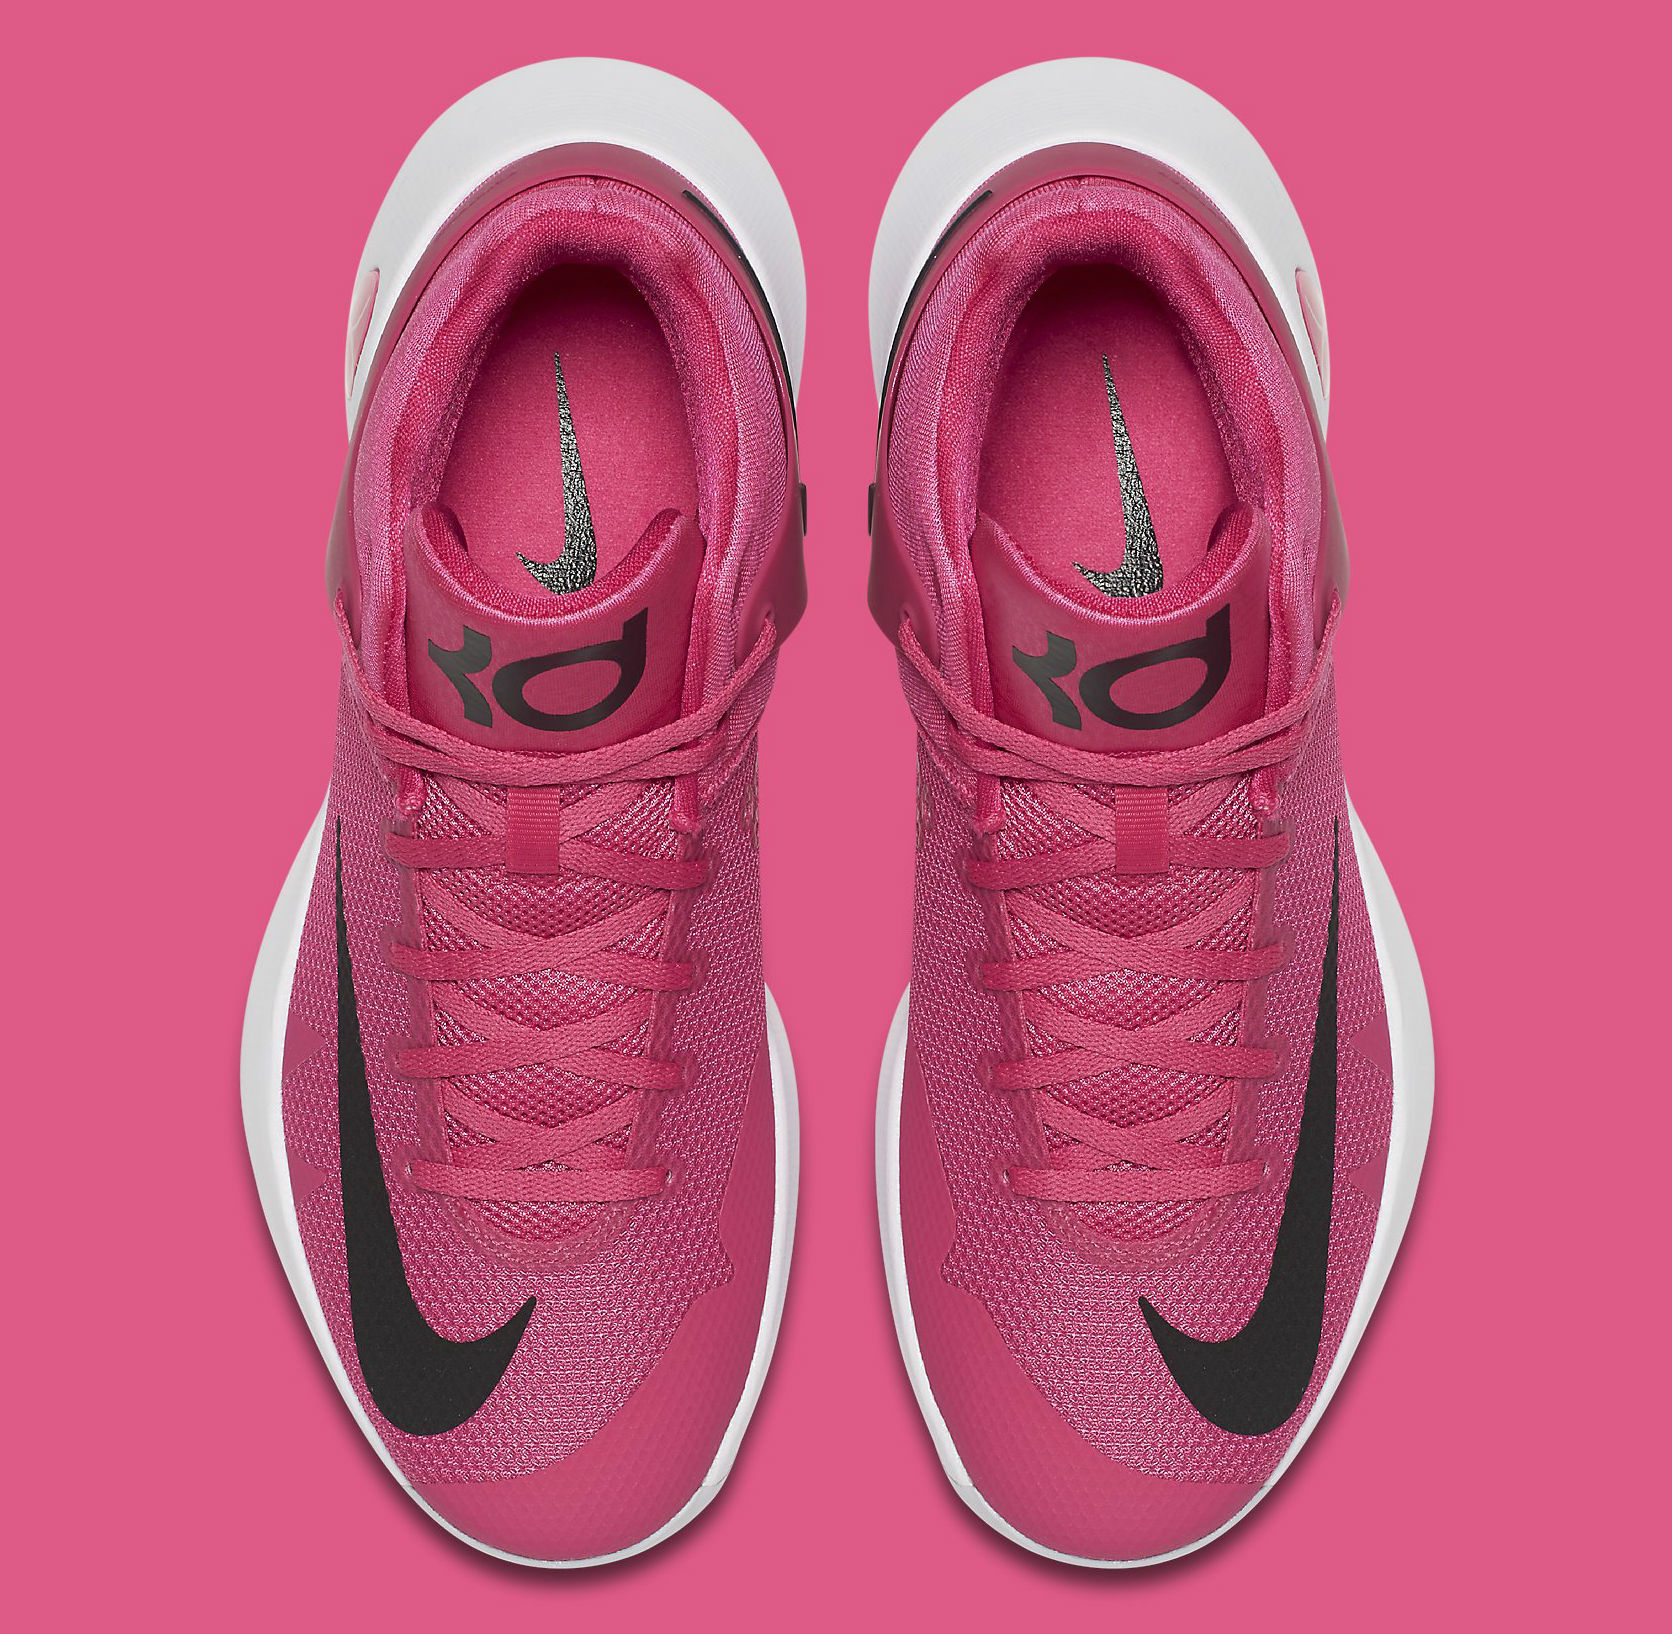 Nike KD Trey 5 IV Think Pink Breast Cancer Kay Yow Top 844573-606